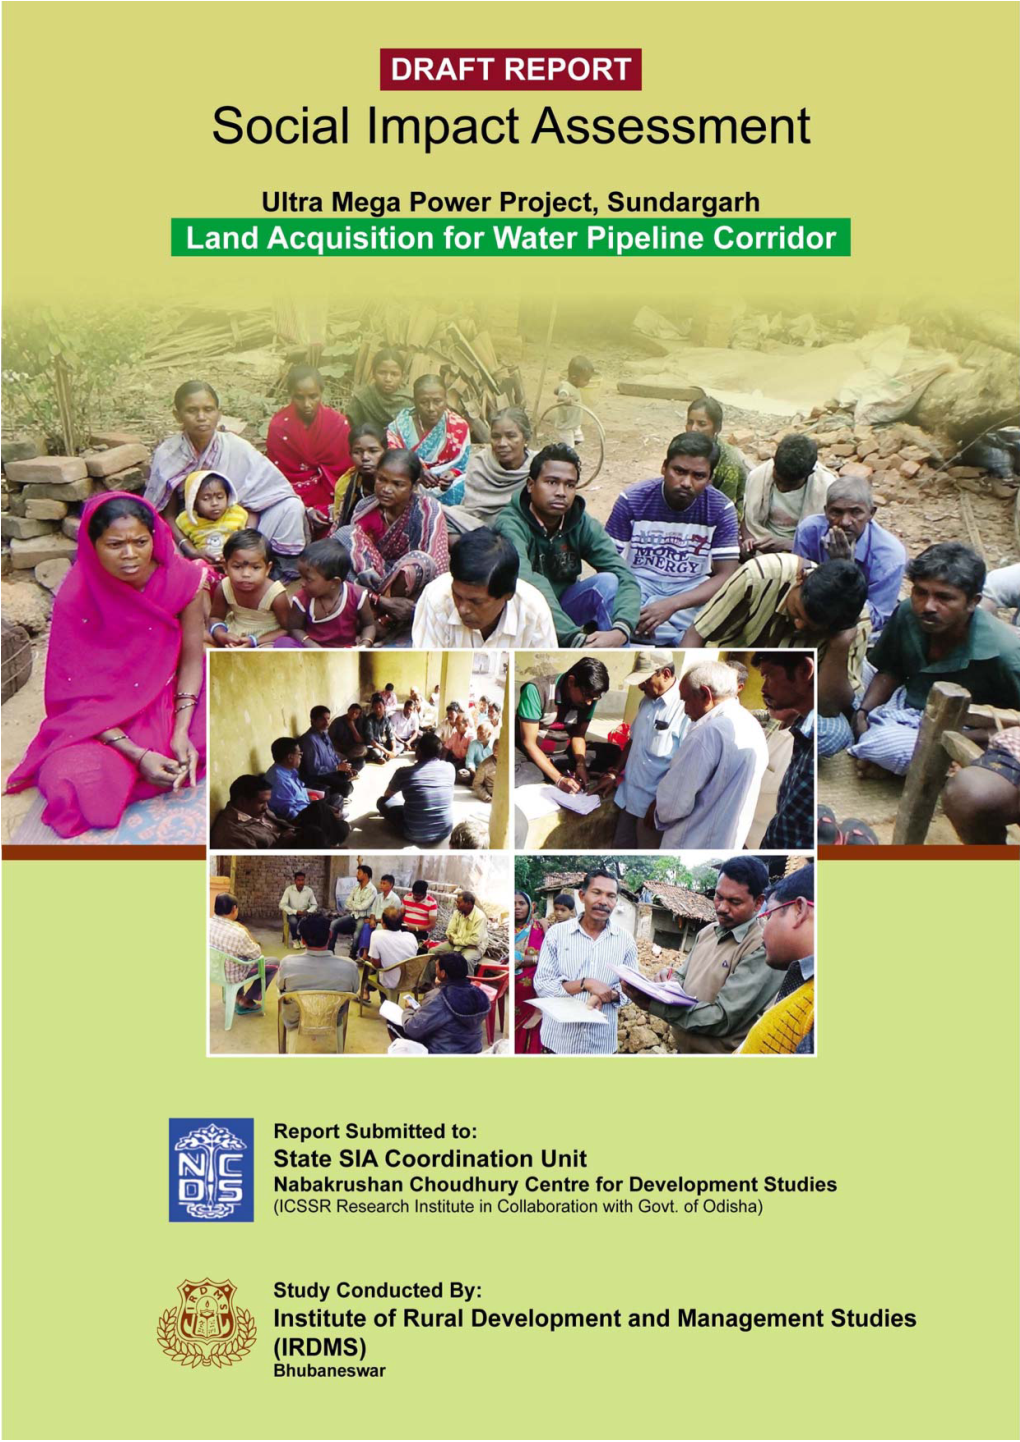 Social Impact Assessment Water Pipeline Corridor, UMPP, Sundargarh